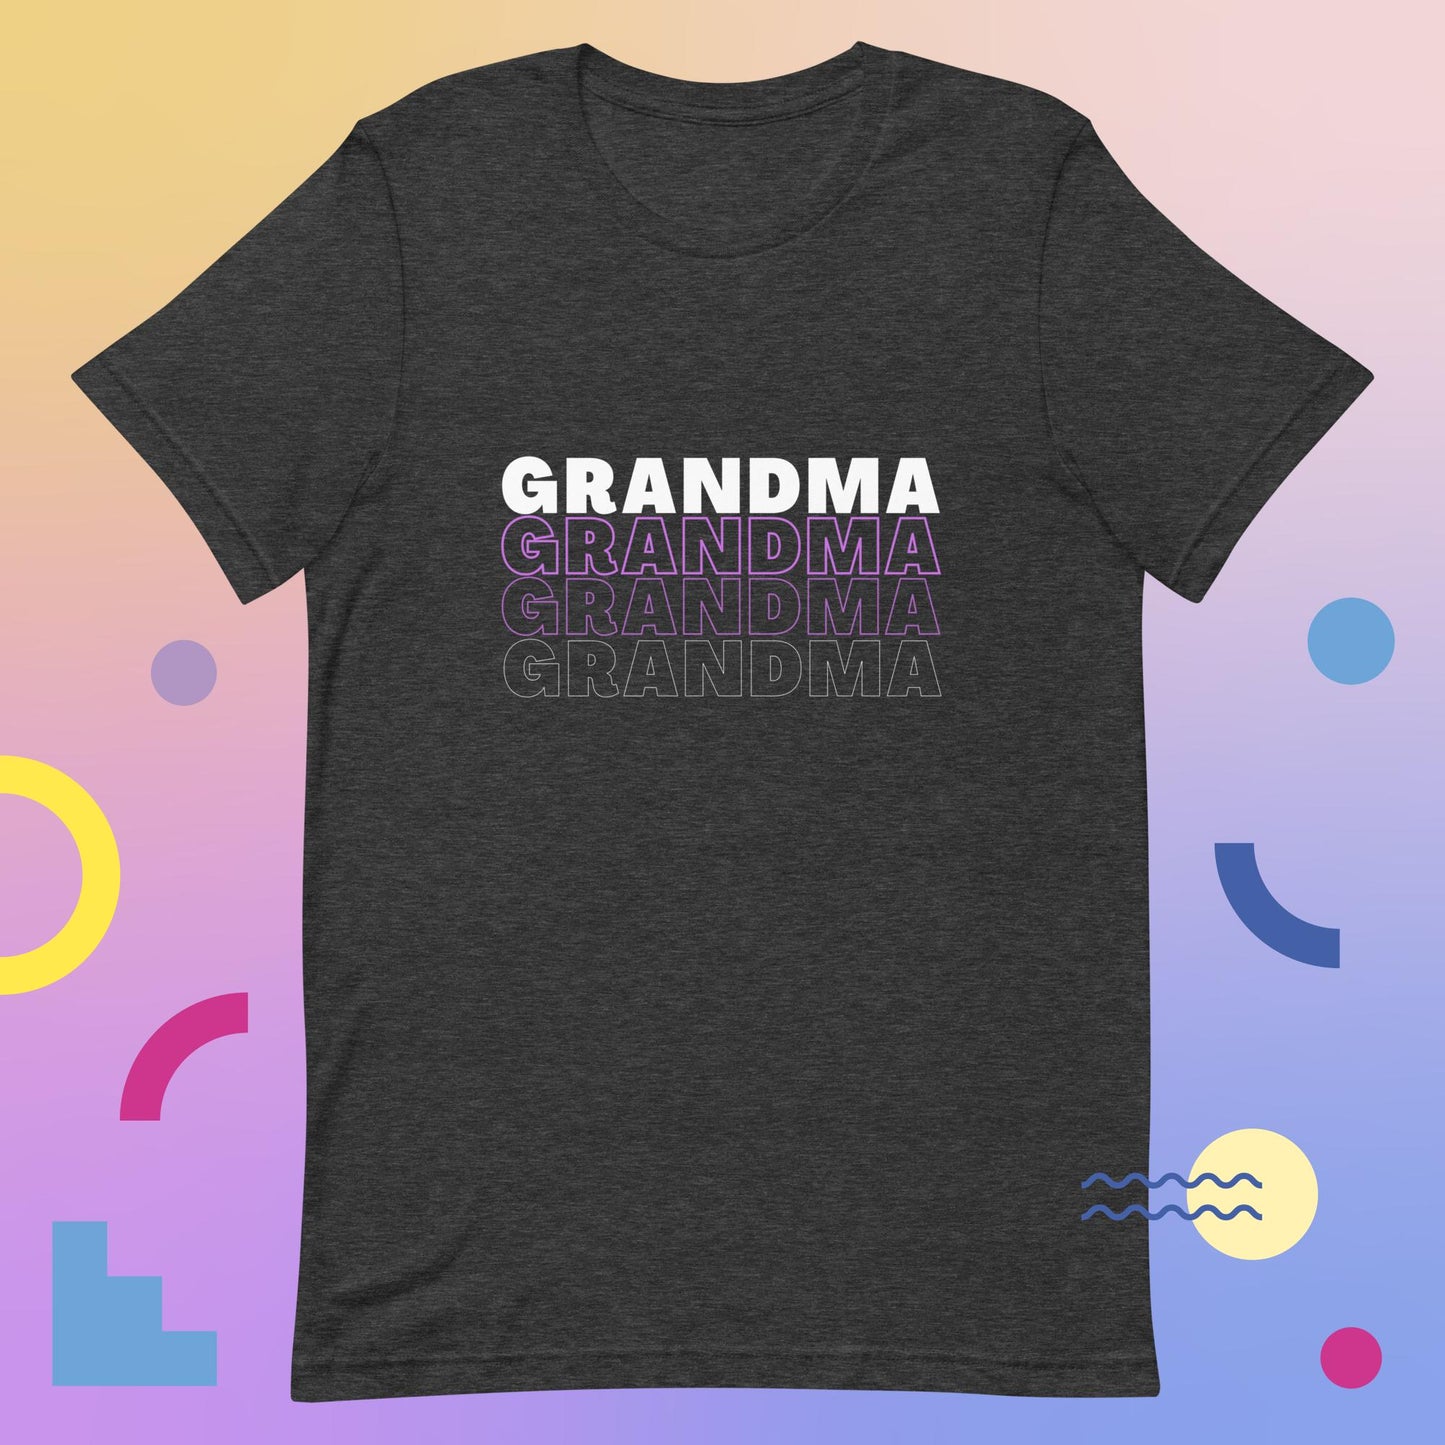 (Grandma) Family Tees Unisex t-shirt